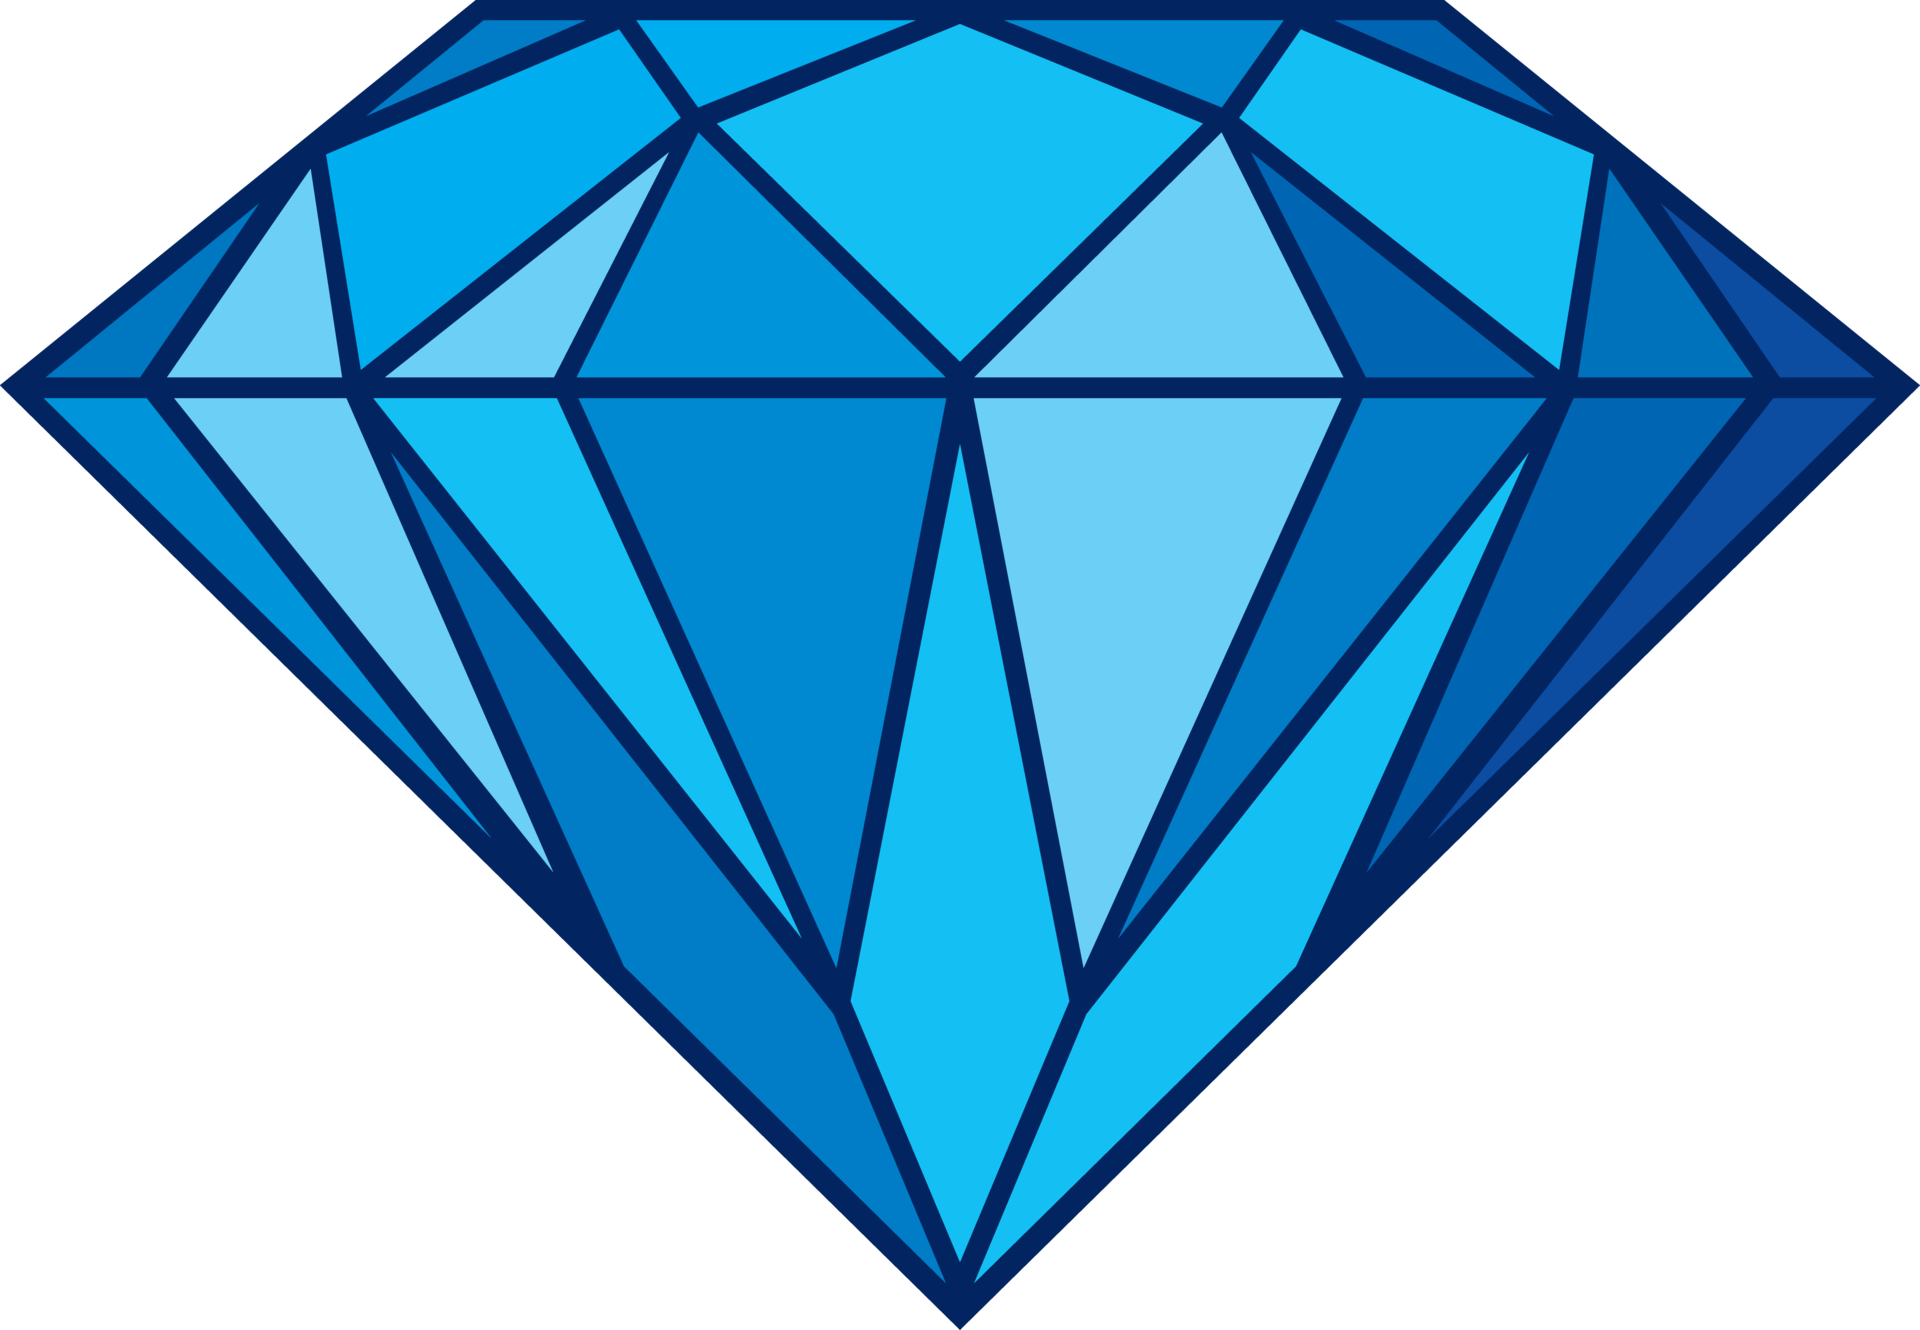 https://static.vecteezy.com/system/resources/previews/008/513/899/original/blue-diamond-illustration-png.png